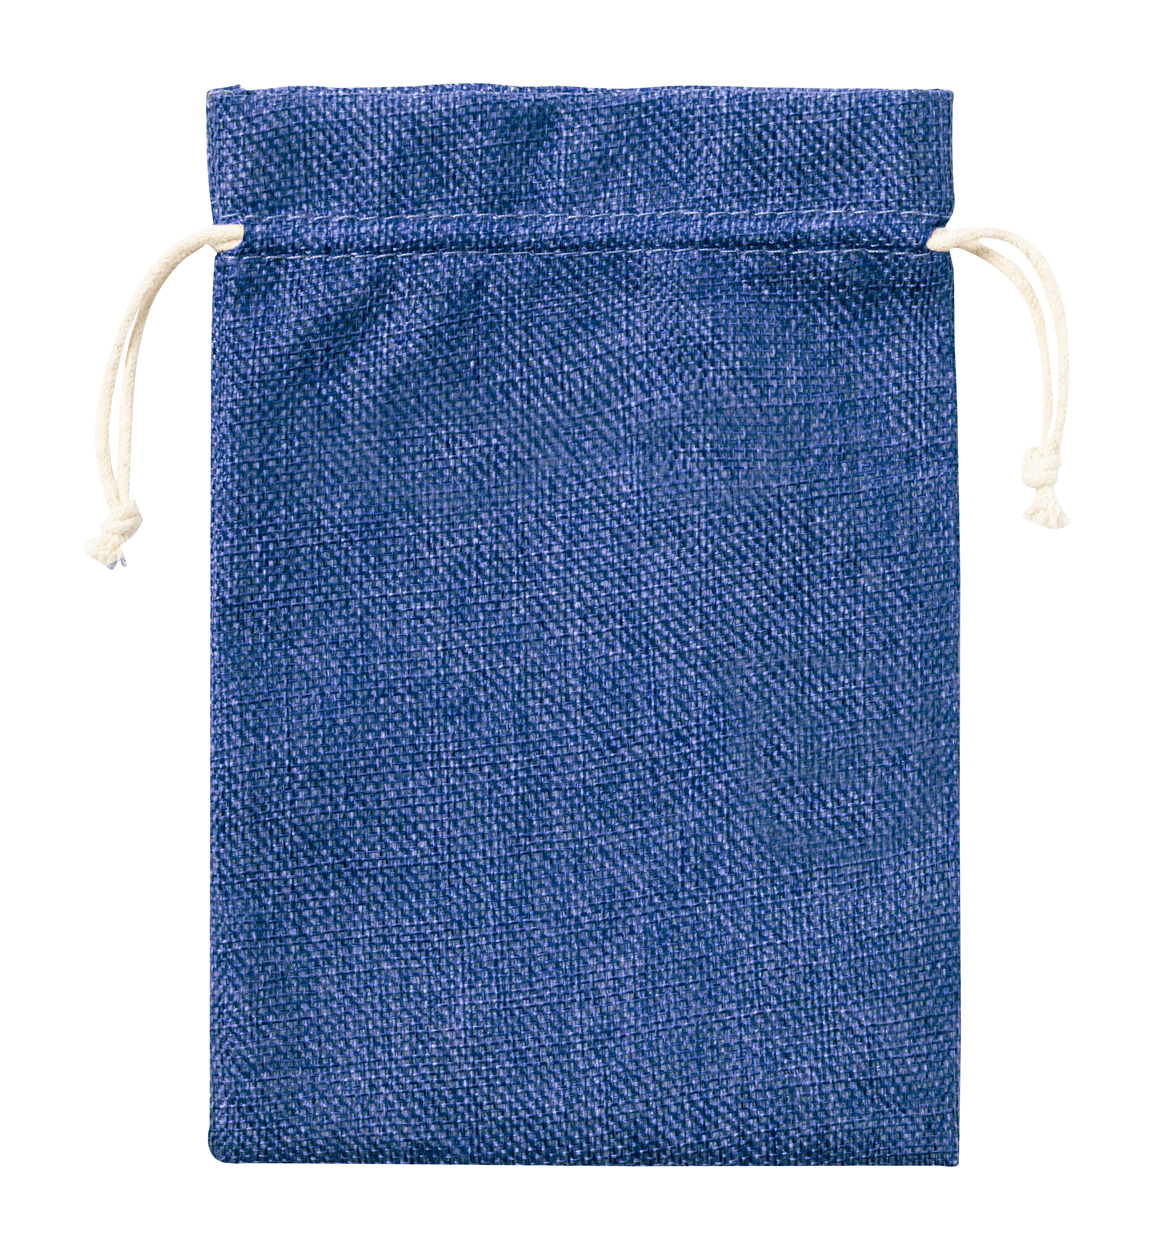 Pidrum grocery bag - blue